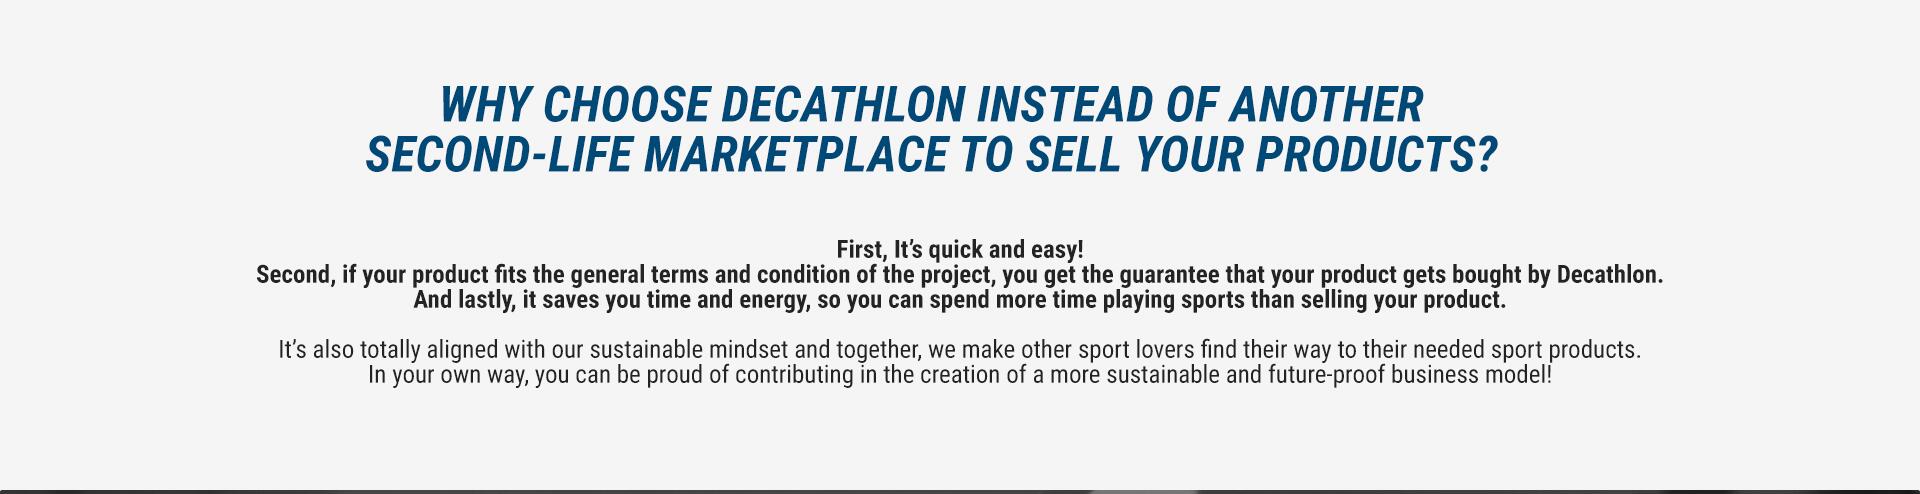 Why Choose Decathlon?